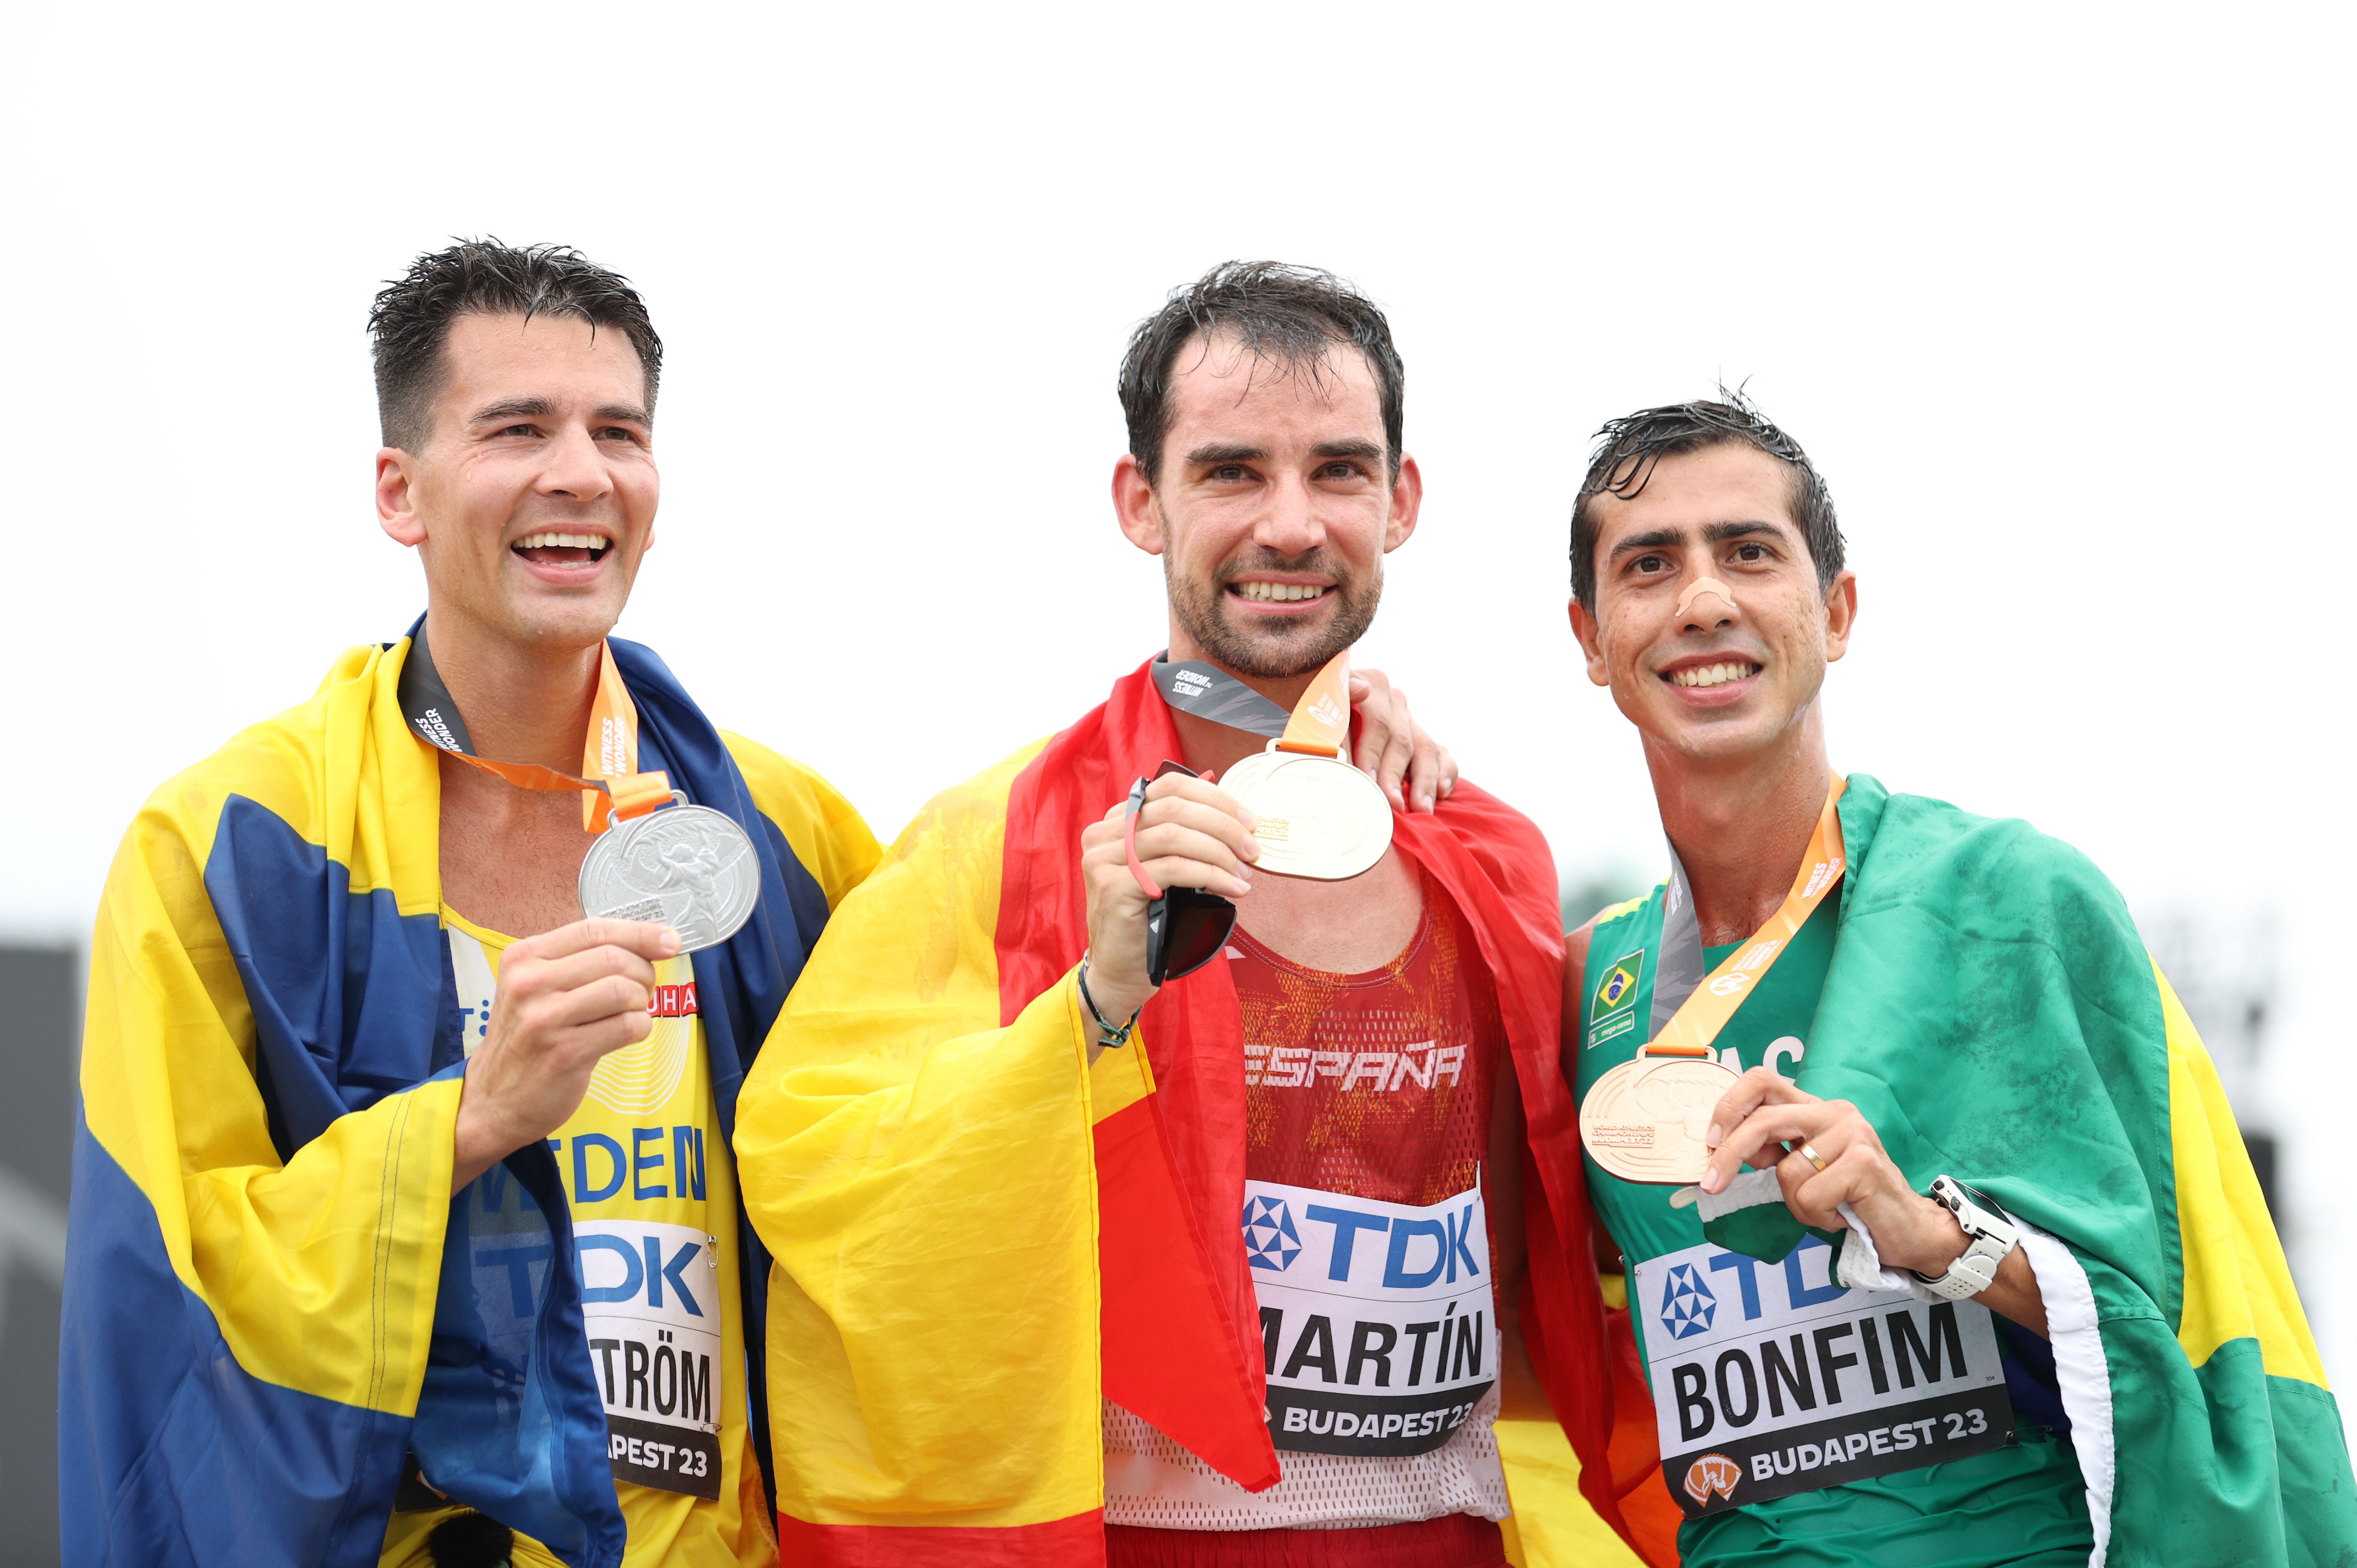 Men's 20km race walk medallists at the World Athletics Championships Budapest 23